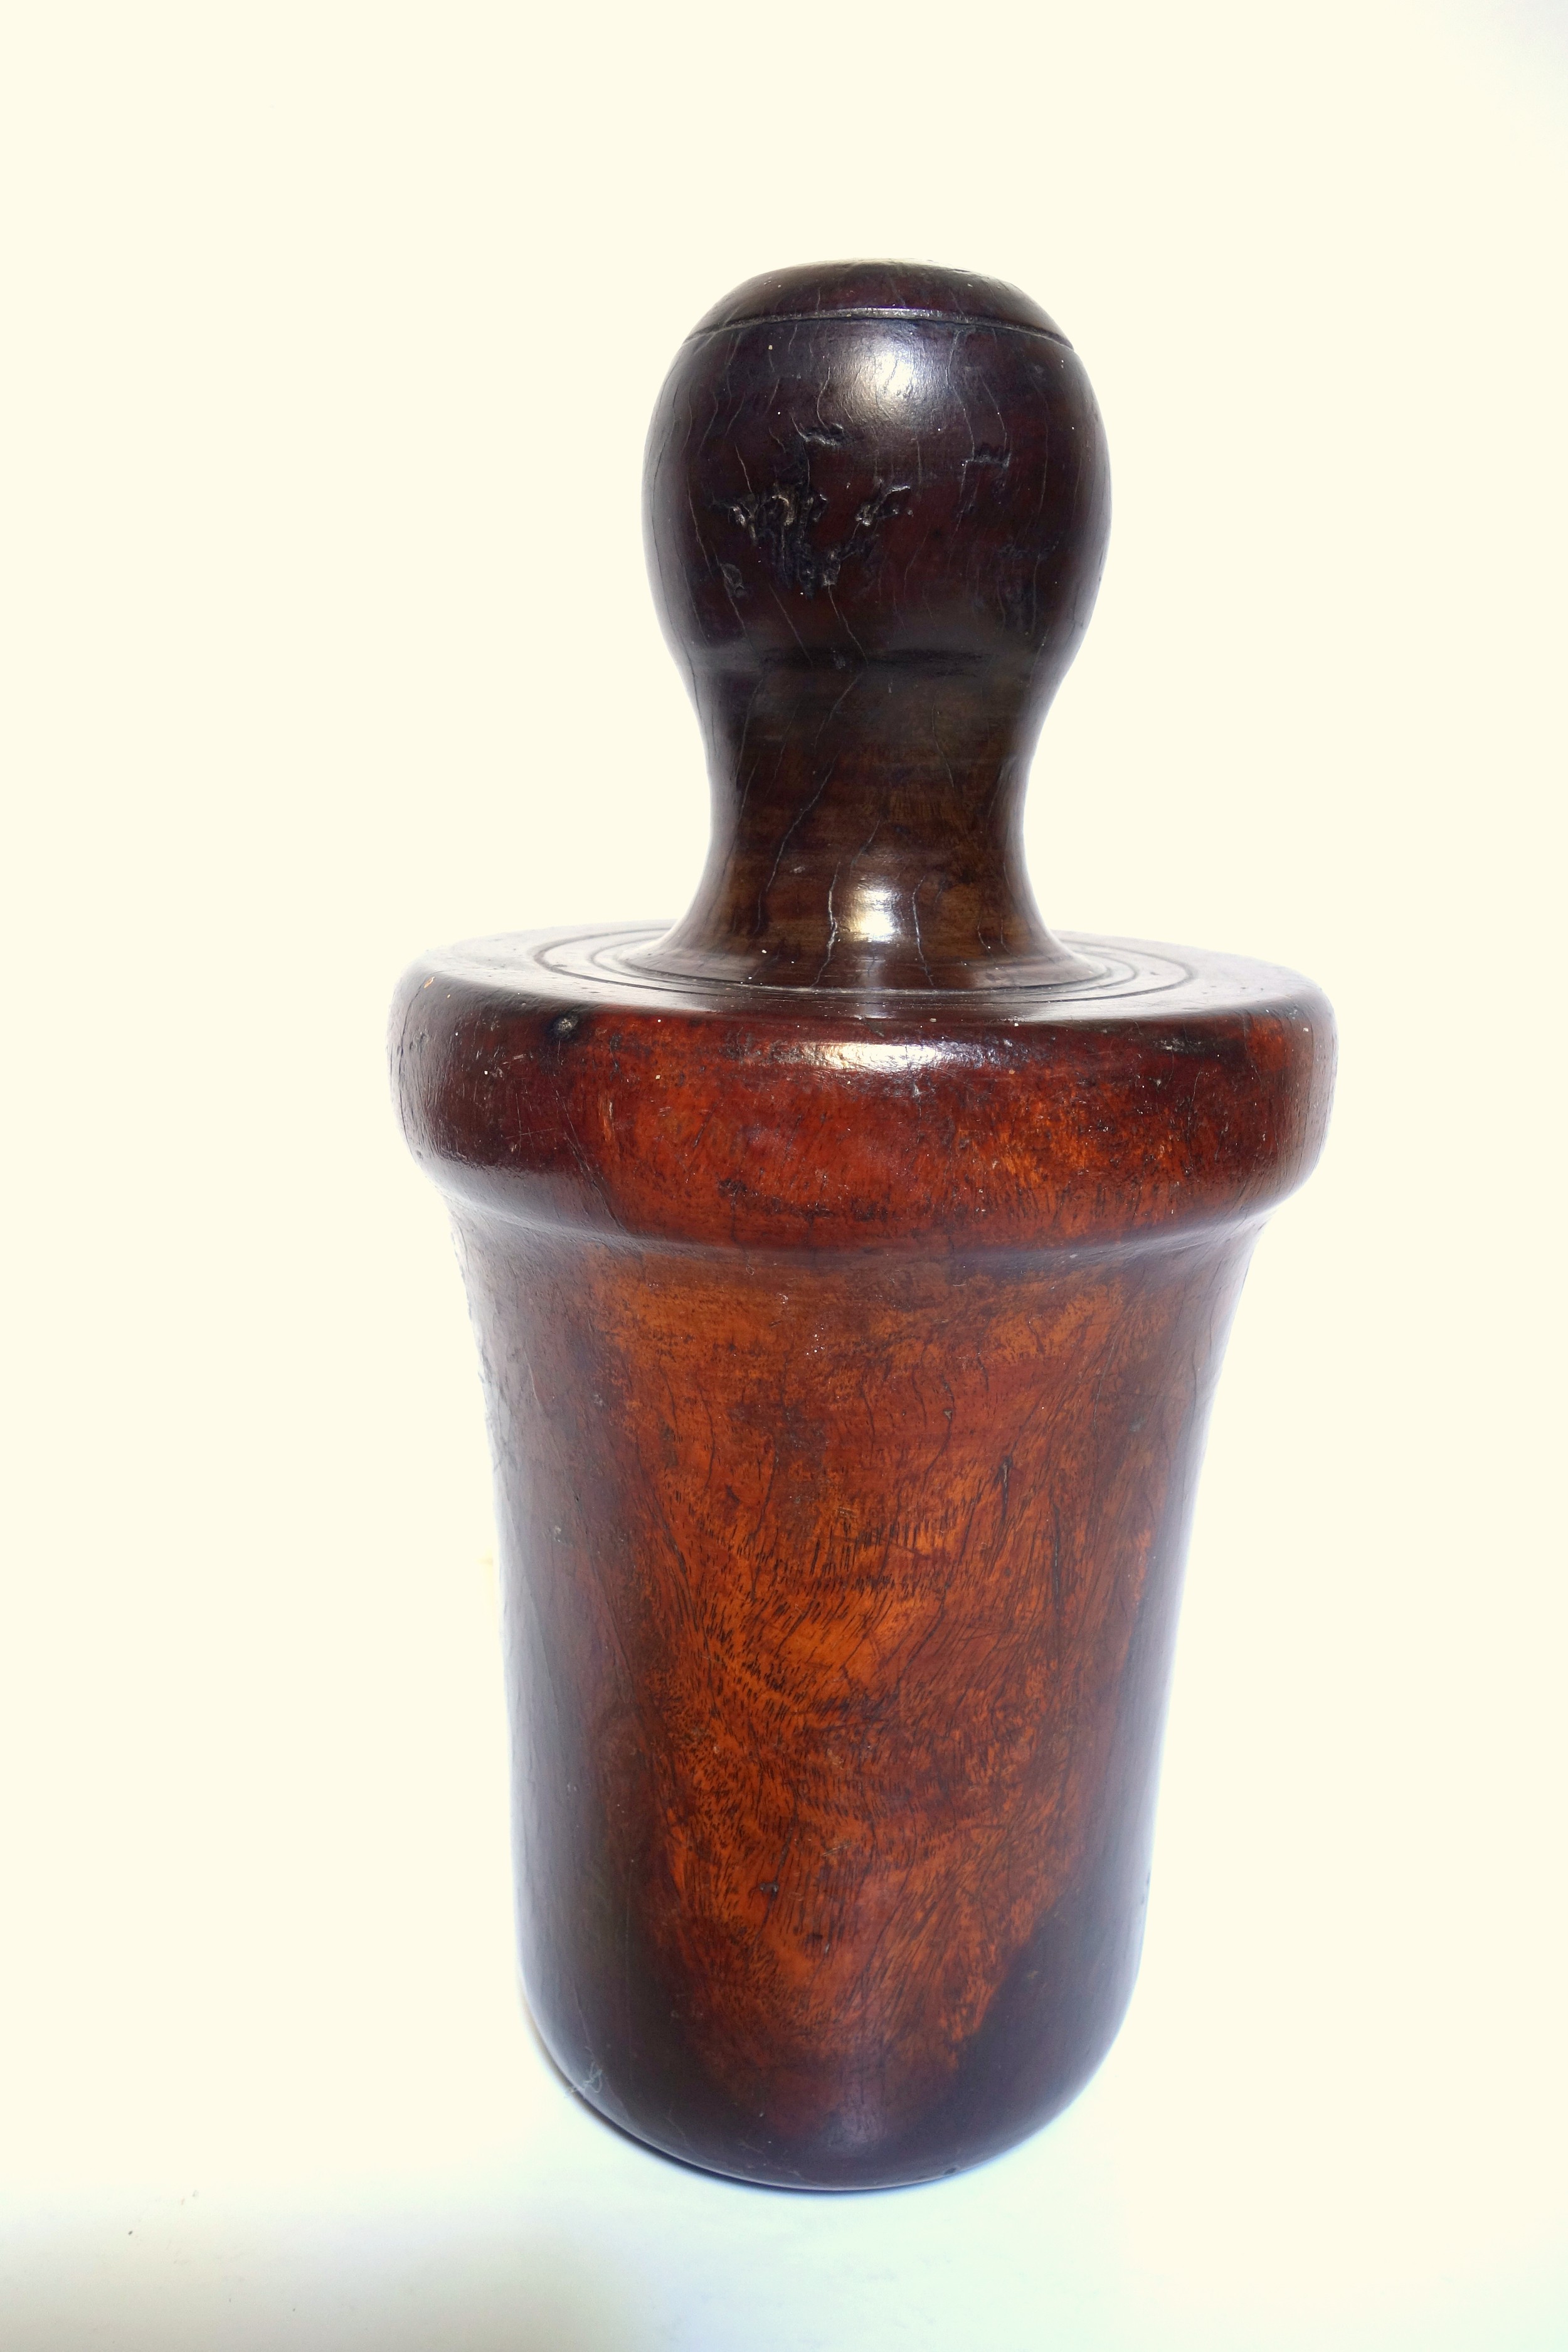 19th century wooden pewter-tankard jack or reformer, 24.5cm high.